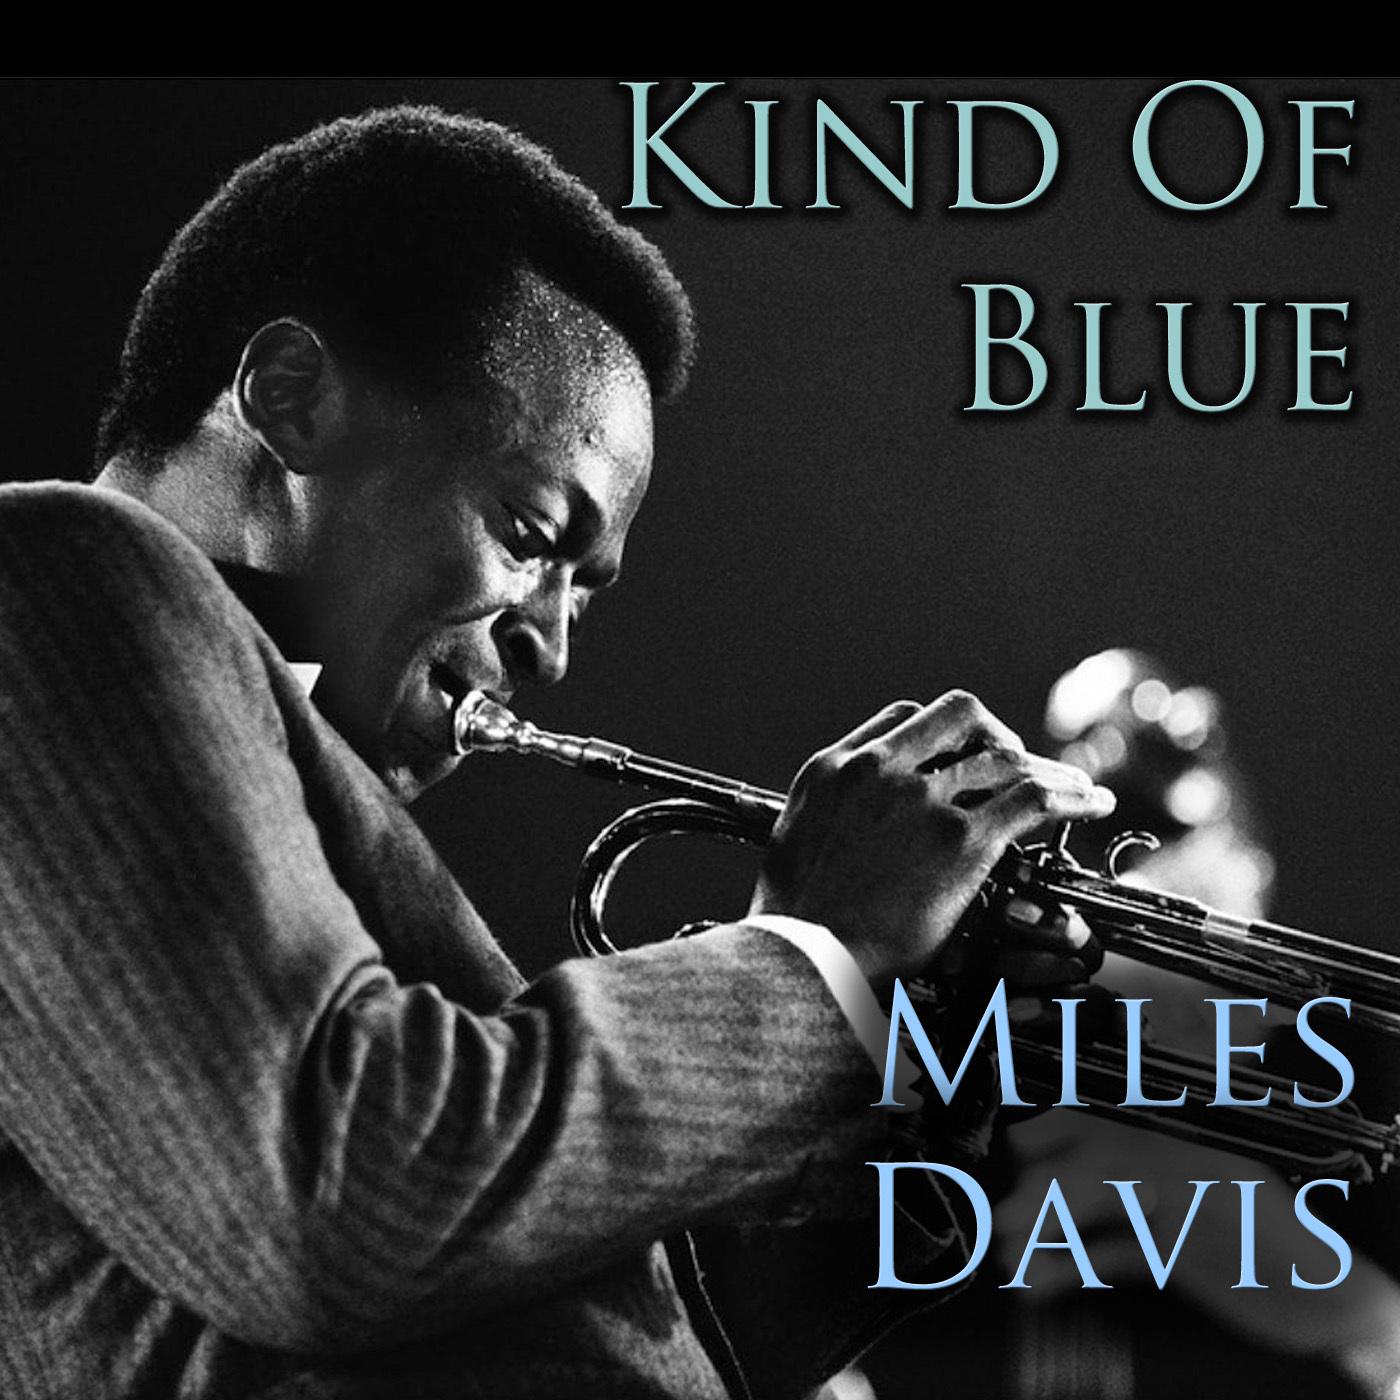 Blue miles. Miles Davis - kind of Blue (1959). Kind of Blue Майлз Дэвис. Miles Davis kind of Blue обложка. Kind of Blue Майлз Дэвис обложка.